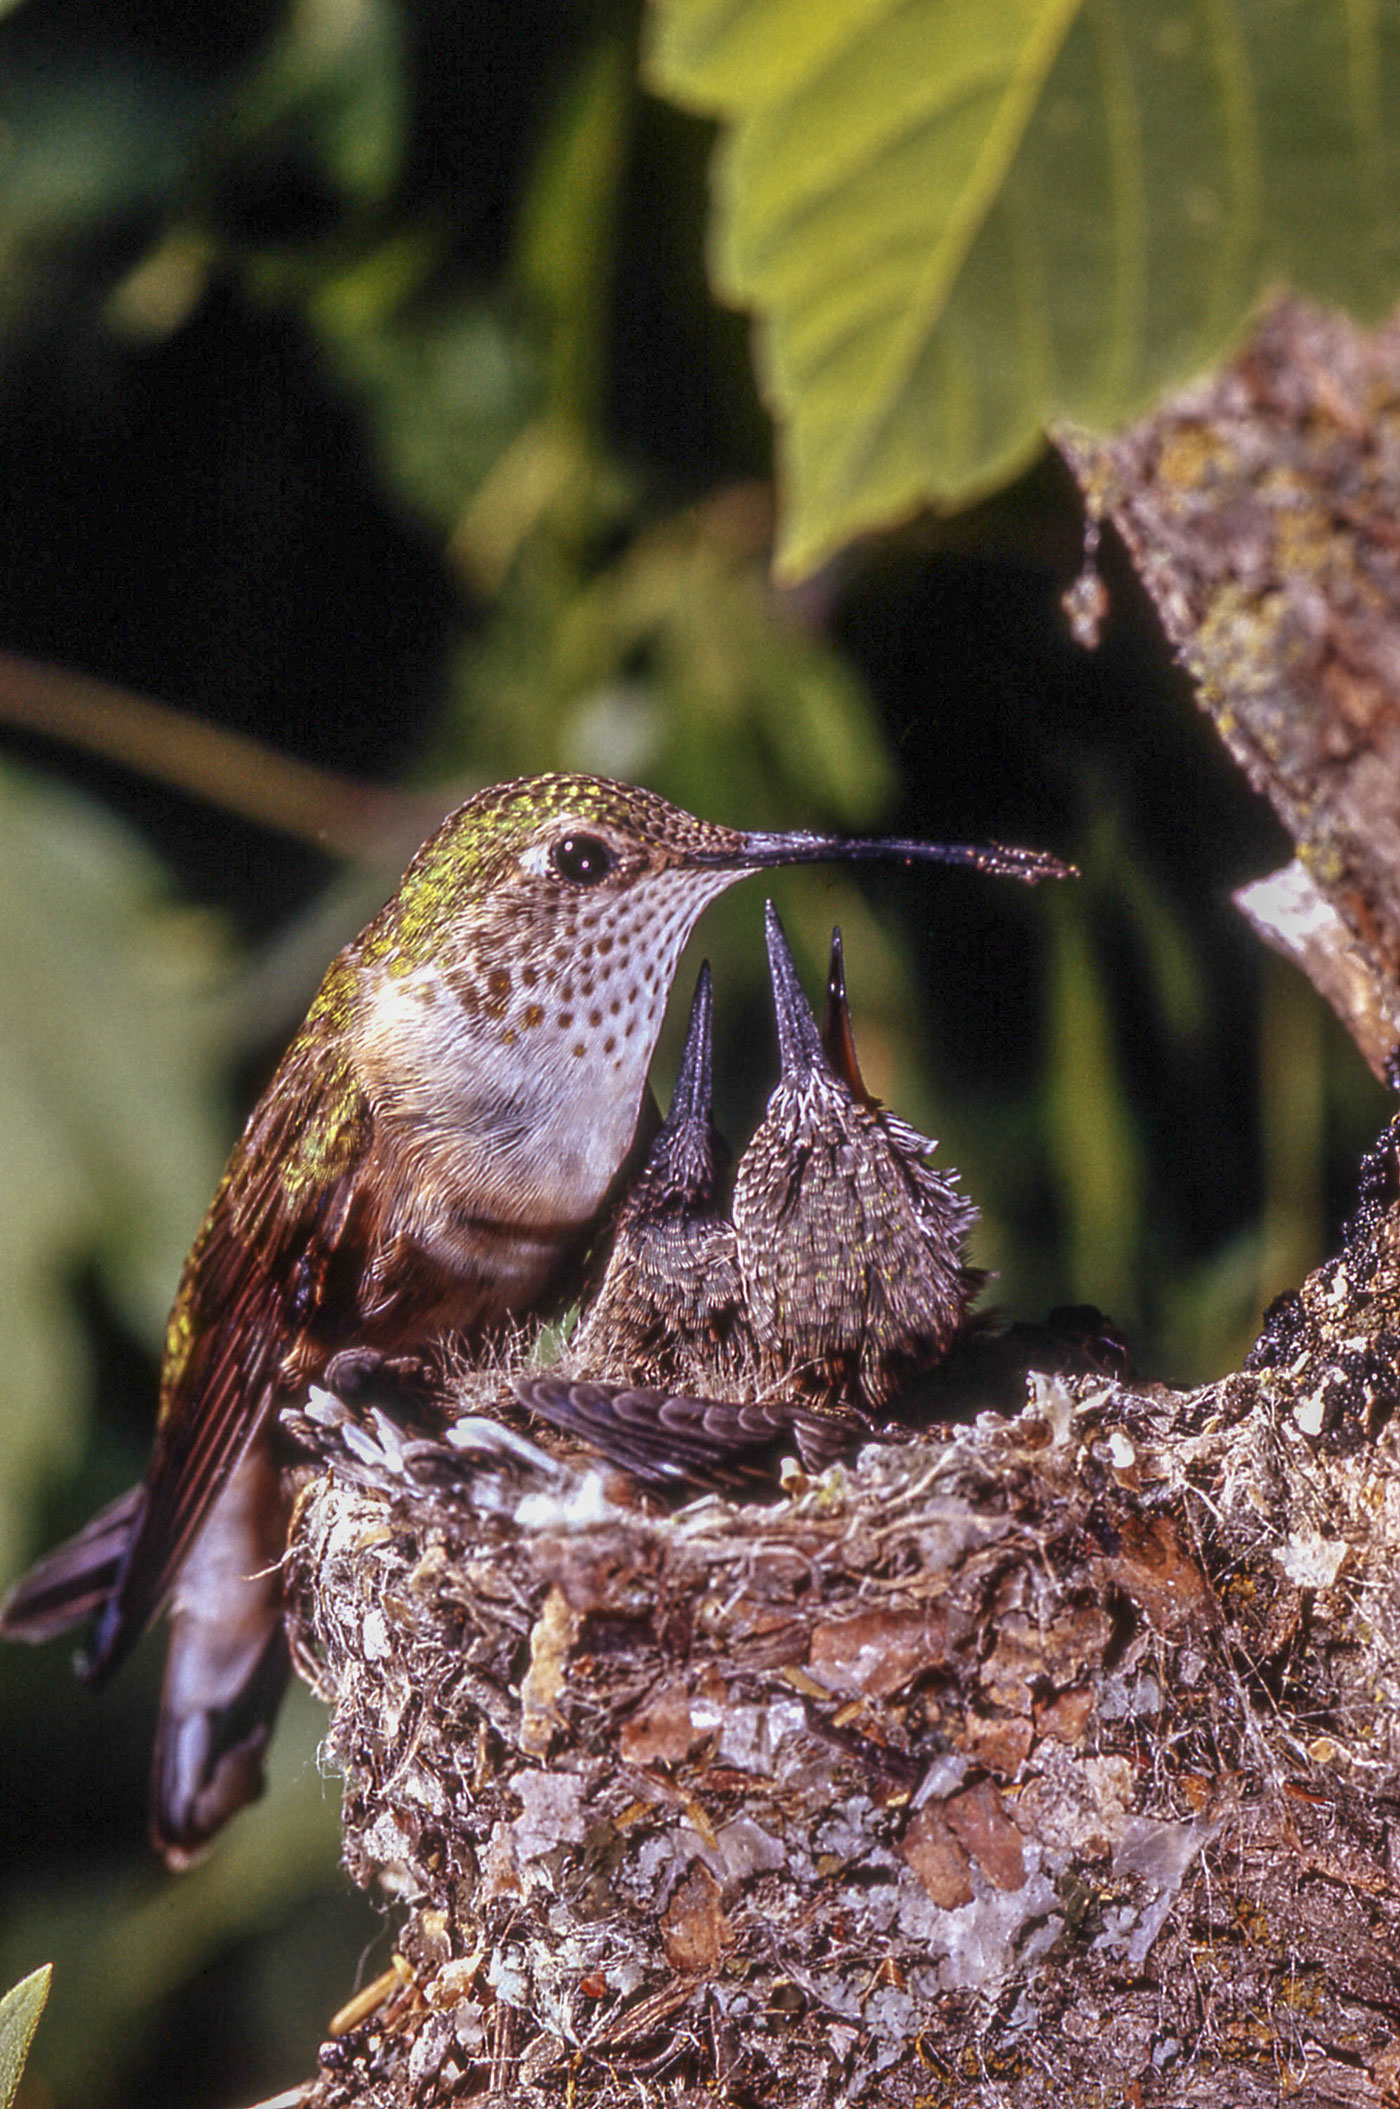 A hummingbird is feeding babies in its nest.